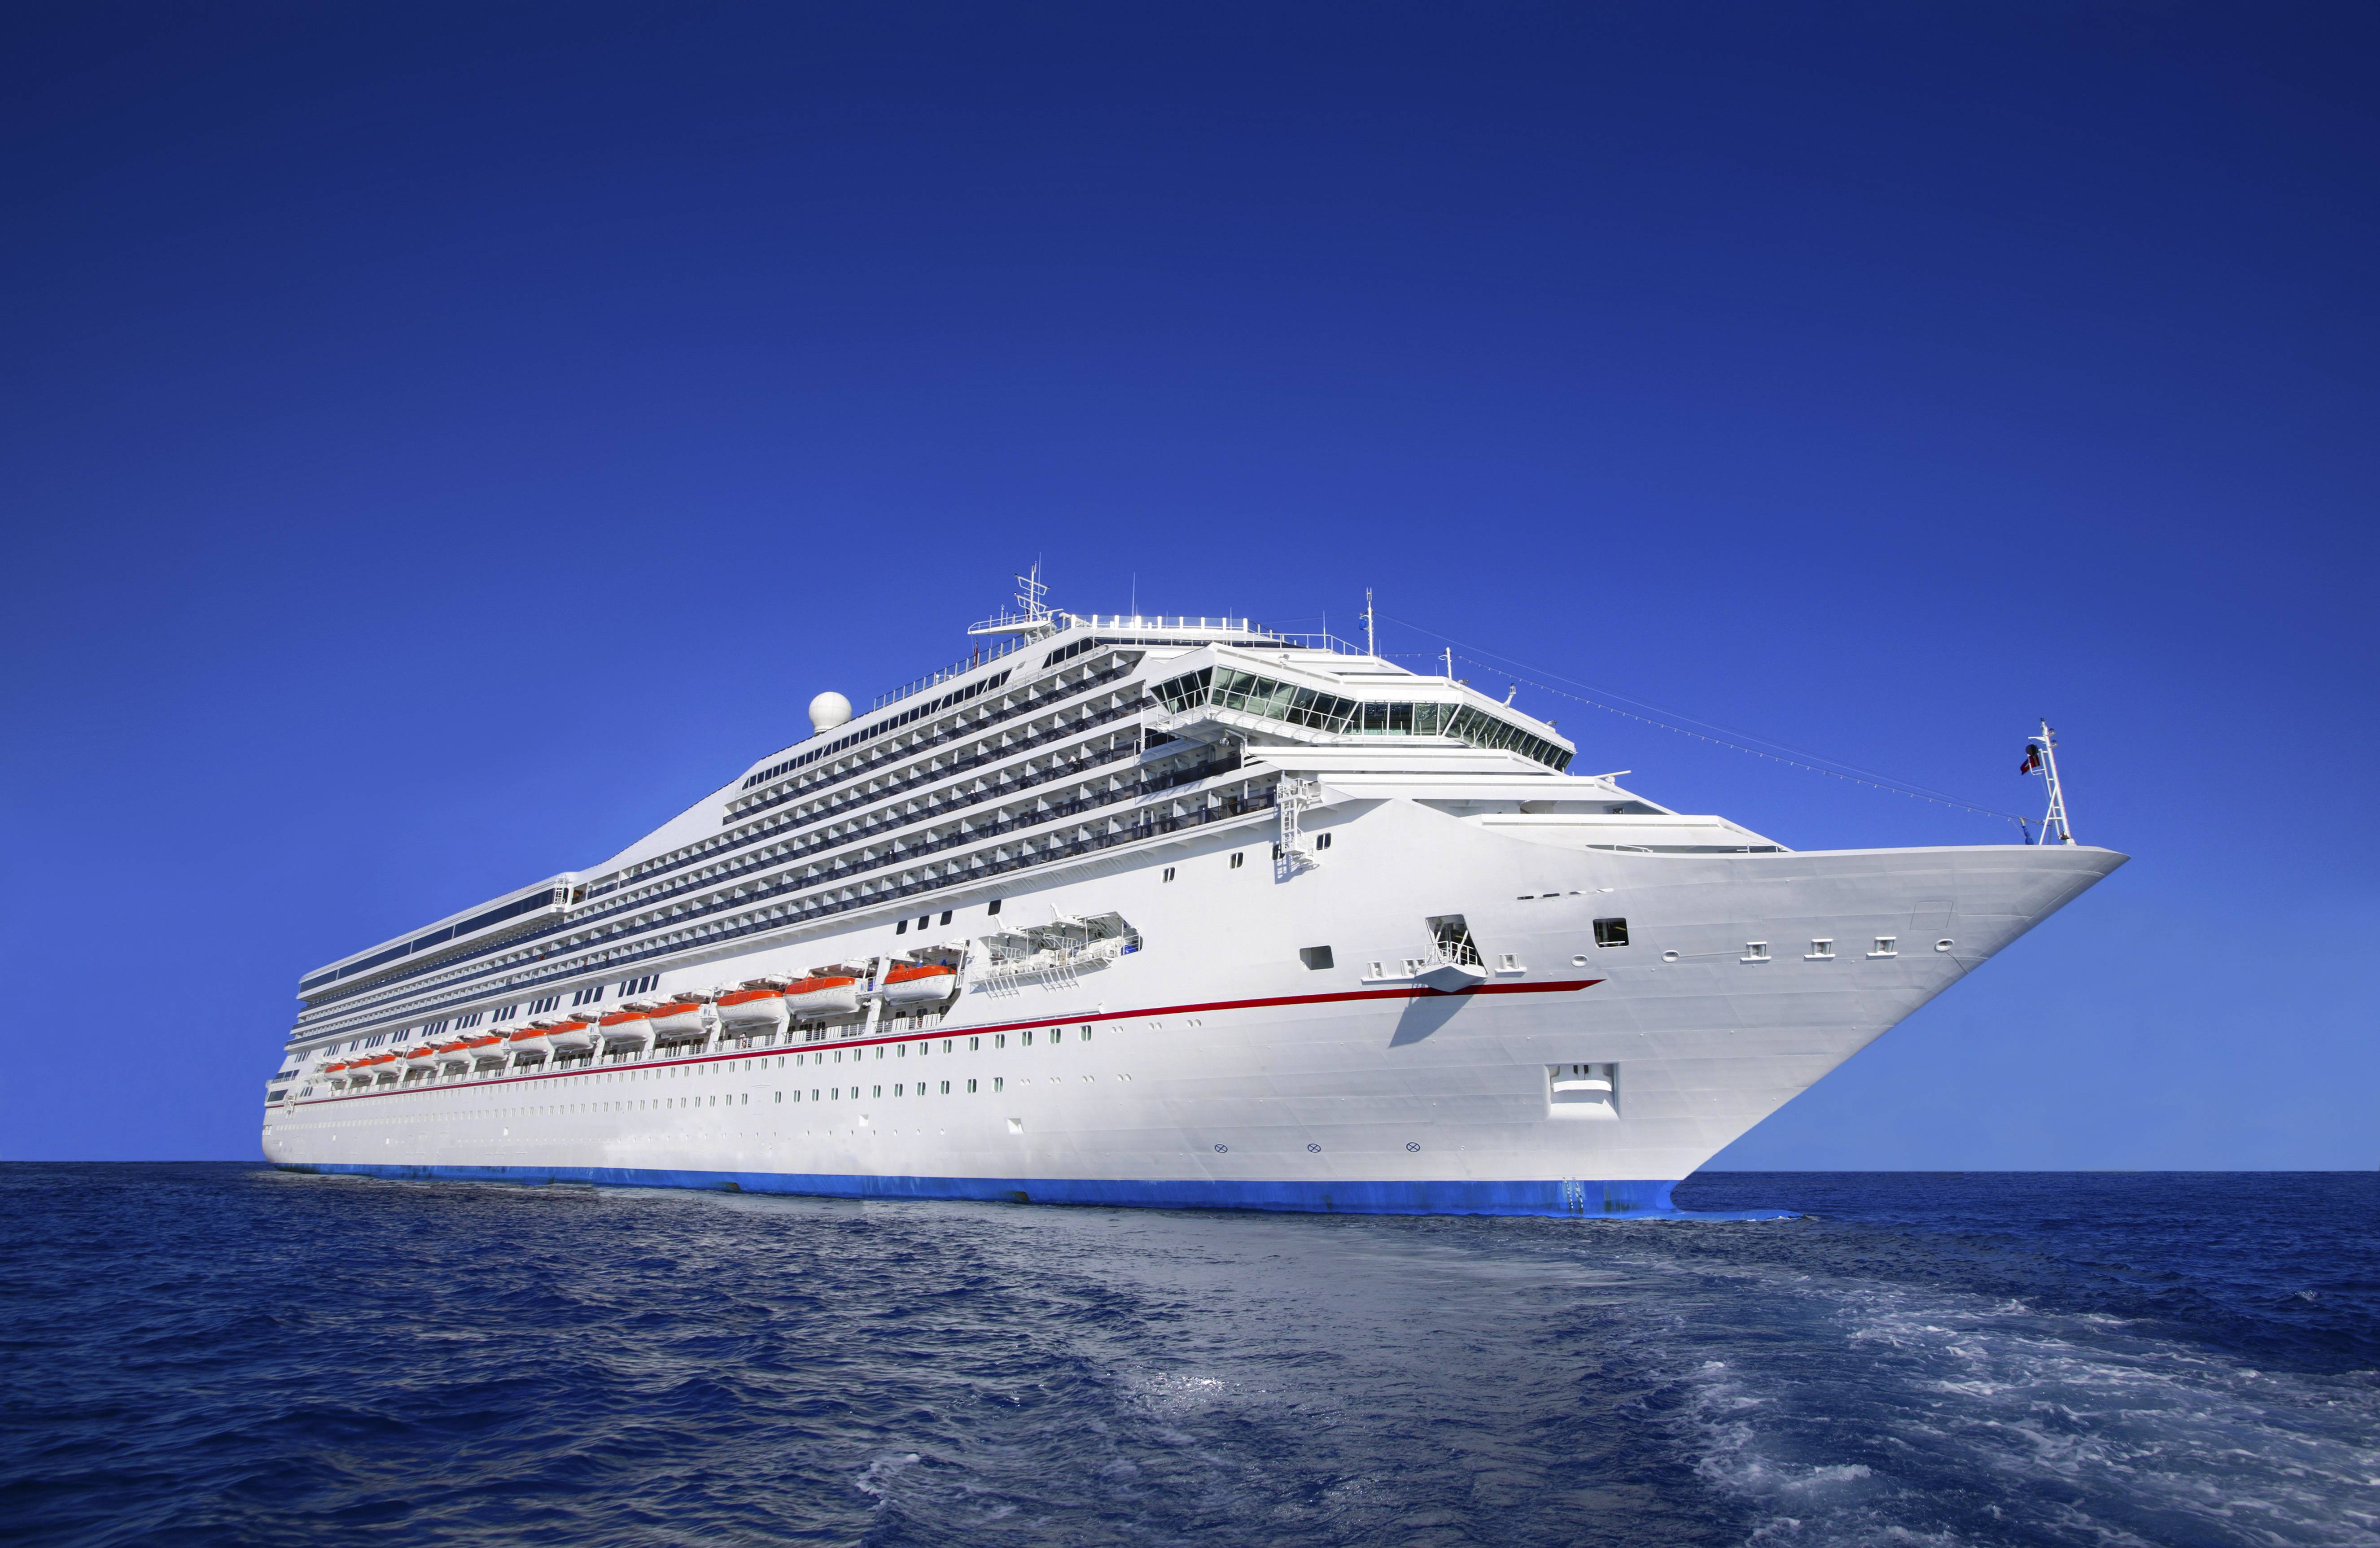 cruise wallpaper,cruise ship,water transportation,ship,vehicle,passenger ship